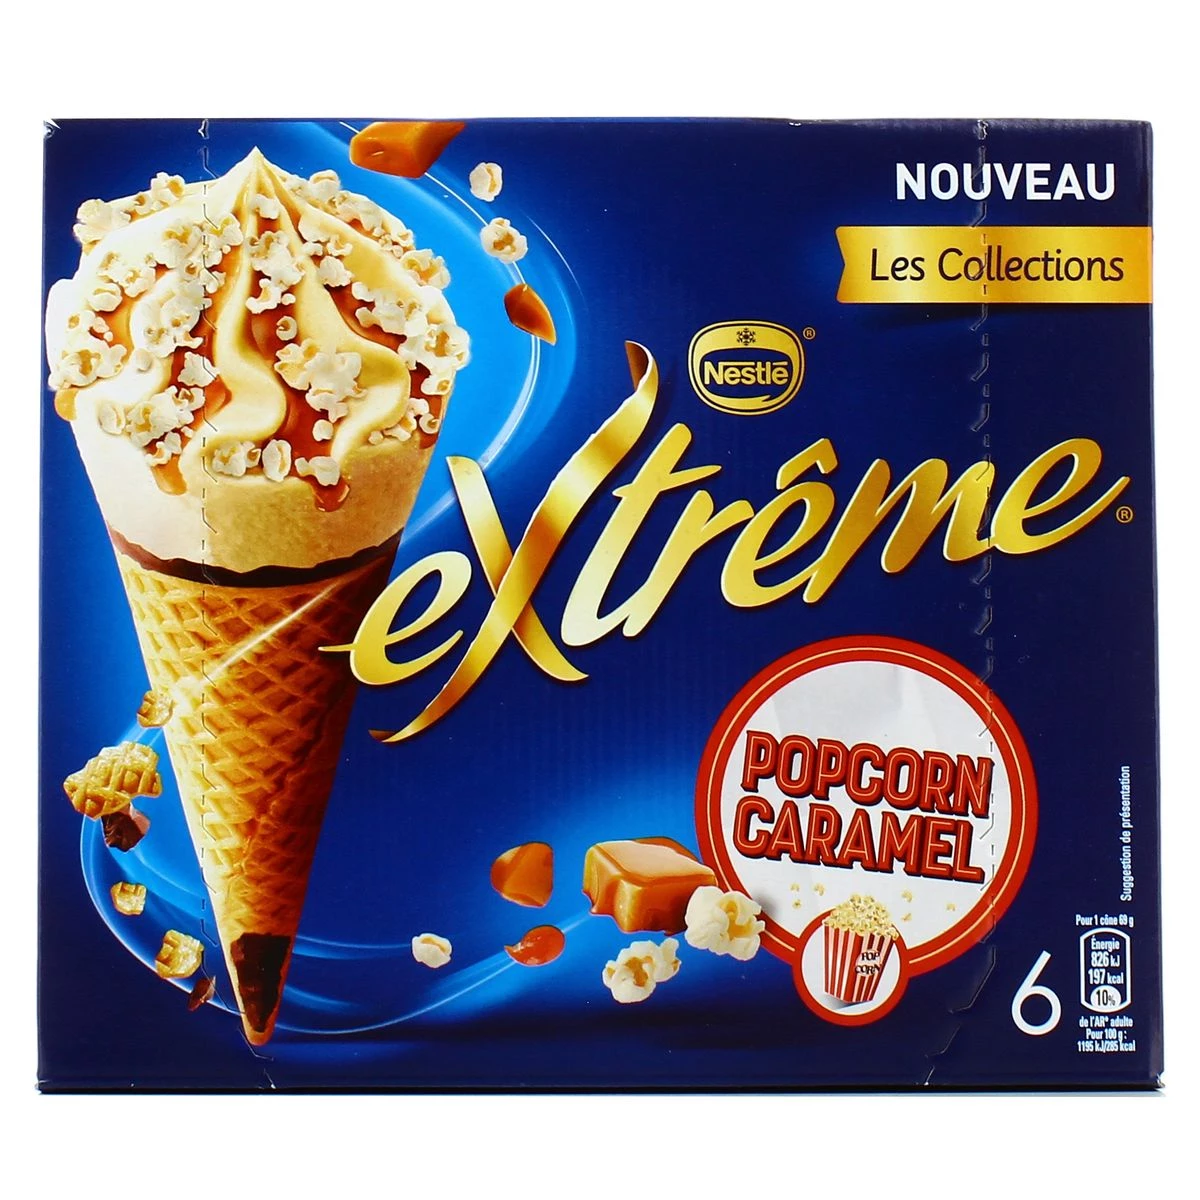 Glaces pop corn & caramel extrême x6 - NESTLE